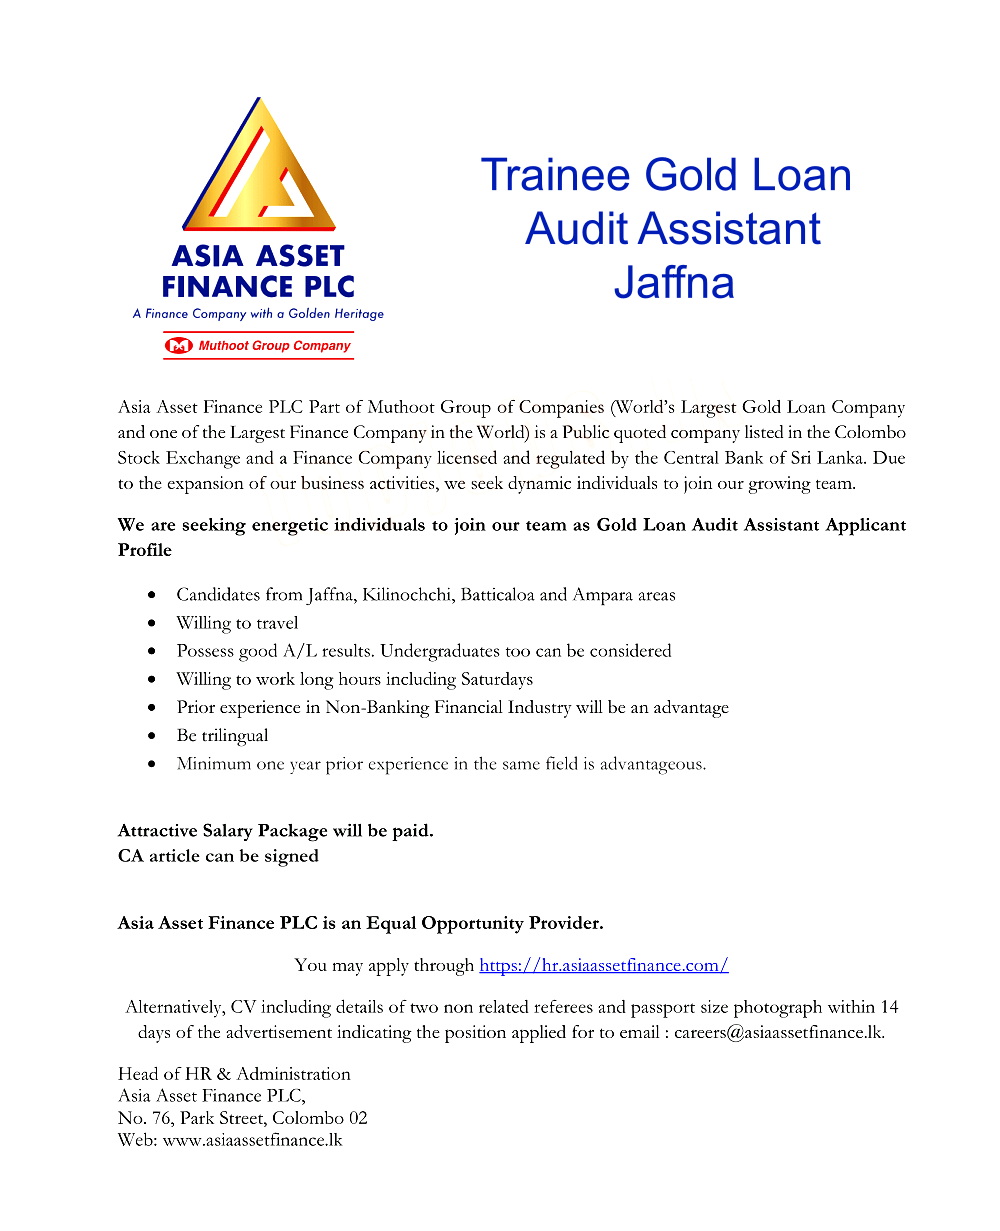 Trainee Gold Loan Audit Assistant Vacancy - Jaffna Asia Asset Finance Vacancies Details